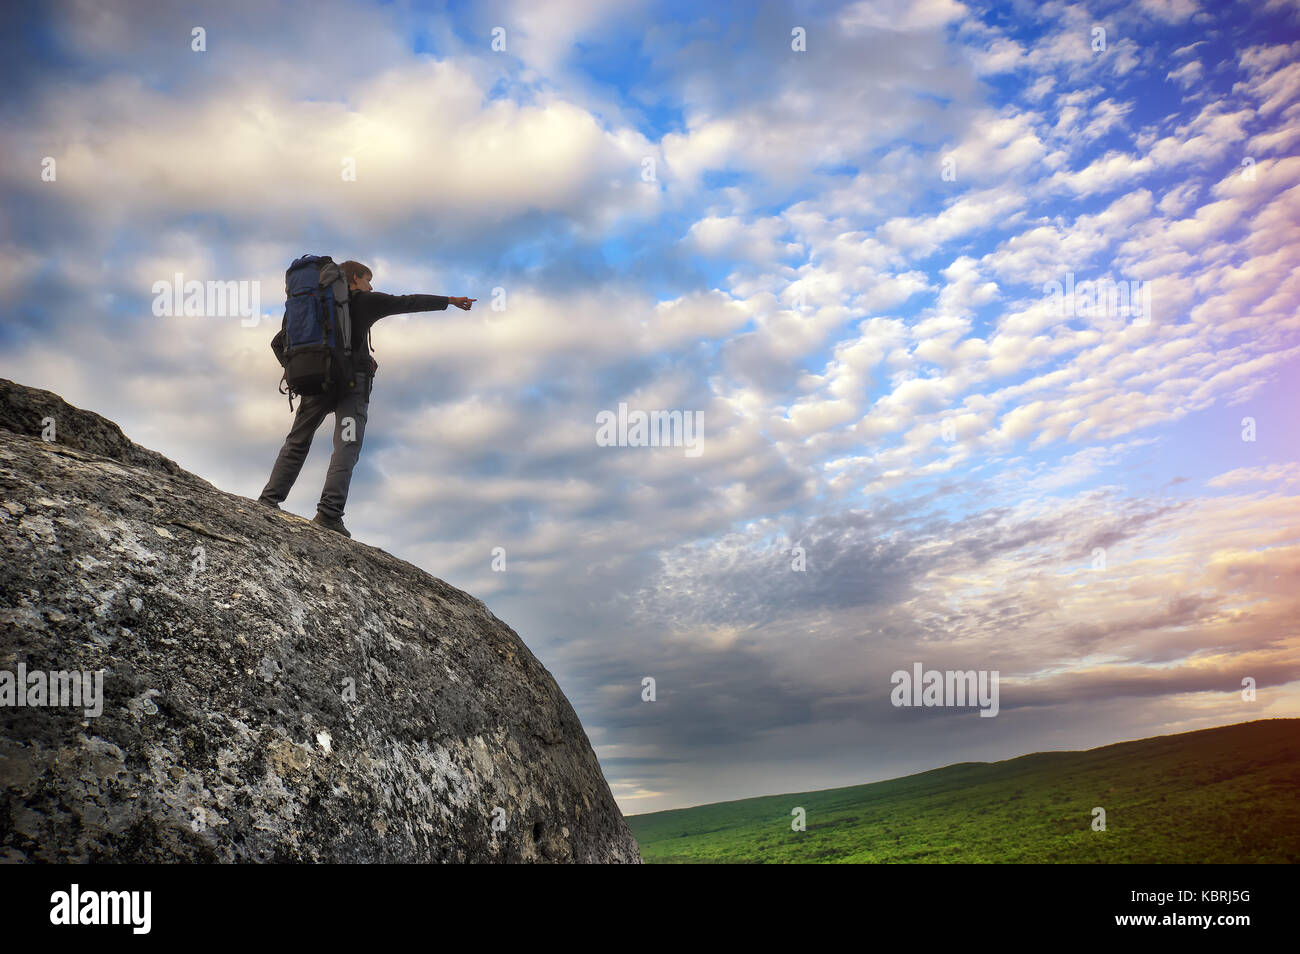 Man on the mountain edge. Conceptual scene. Stock Photo